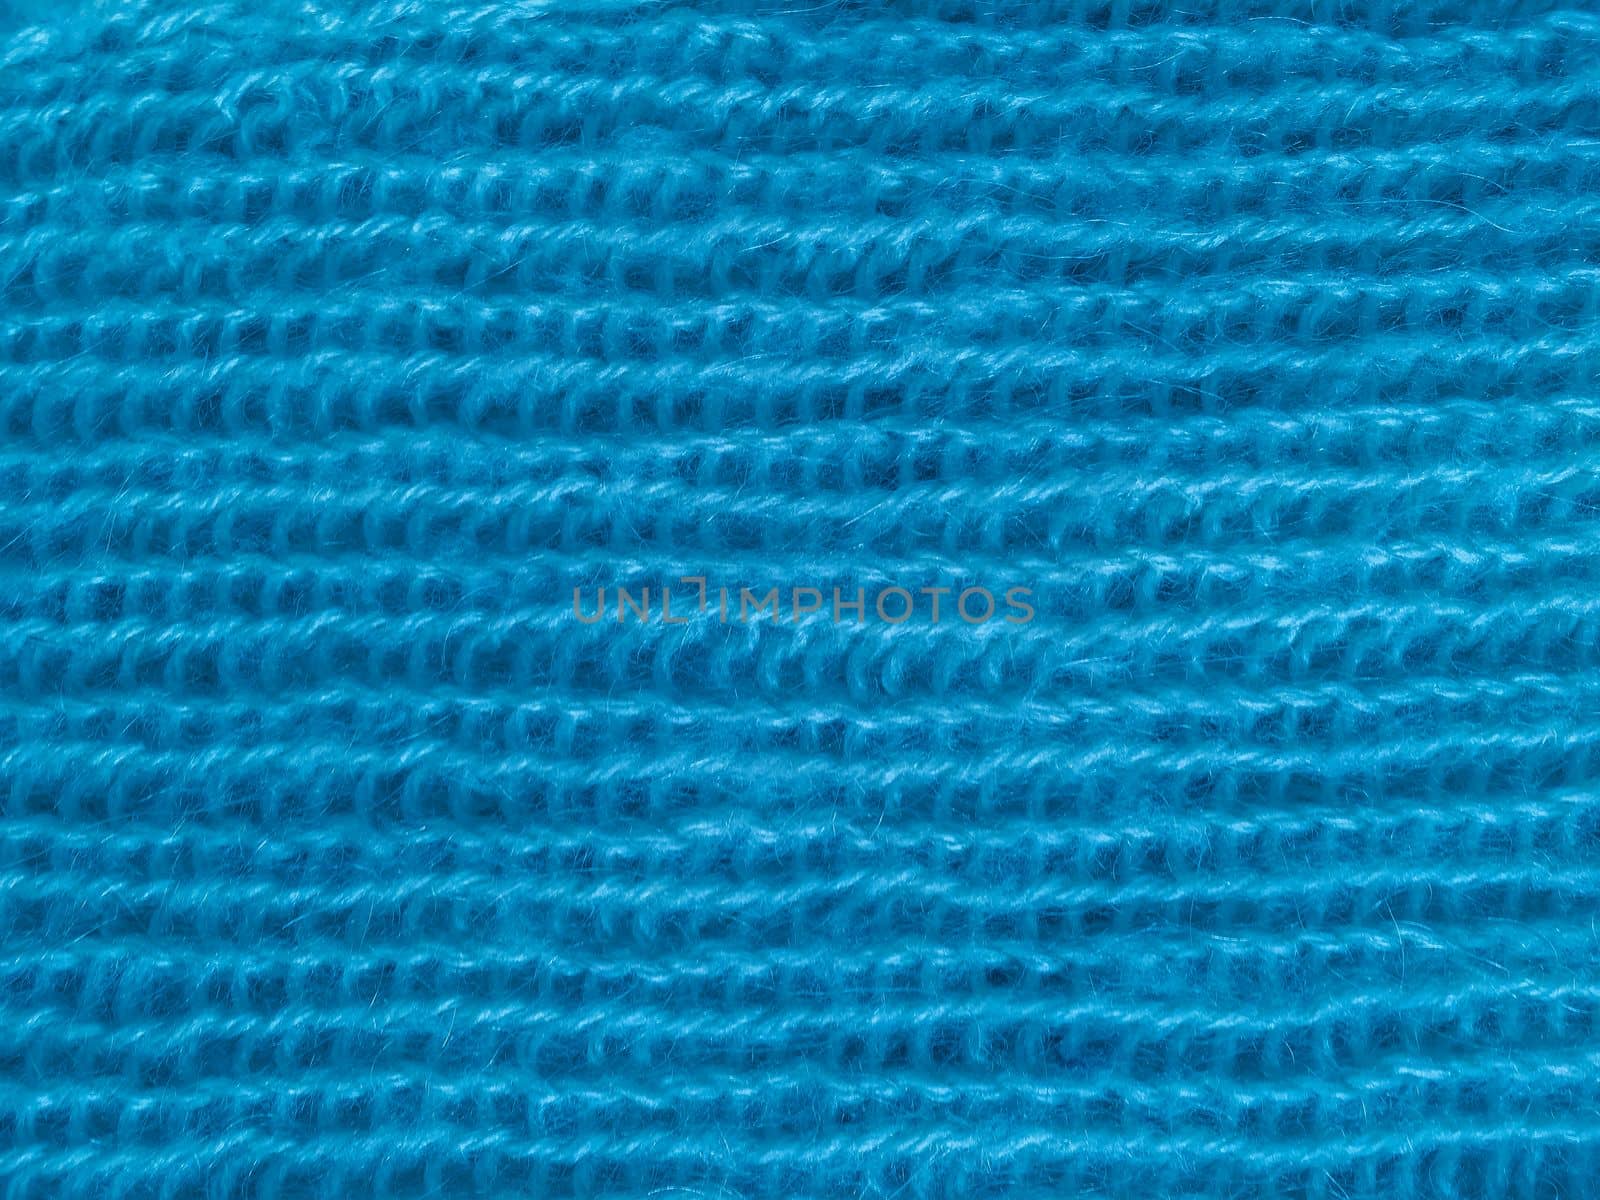 Wool Knit Closeup. Warm Woven Print. Handmade Detail Background. Winter Knit Pattern. Scandinavian Fiber Cashmere. Organic Macro Thread. Vintage Knitwear Blanket. Wool Knit Closeup.